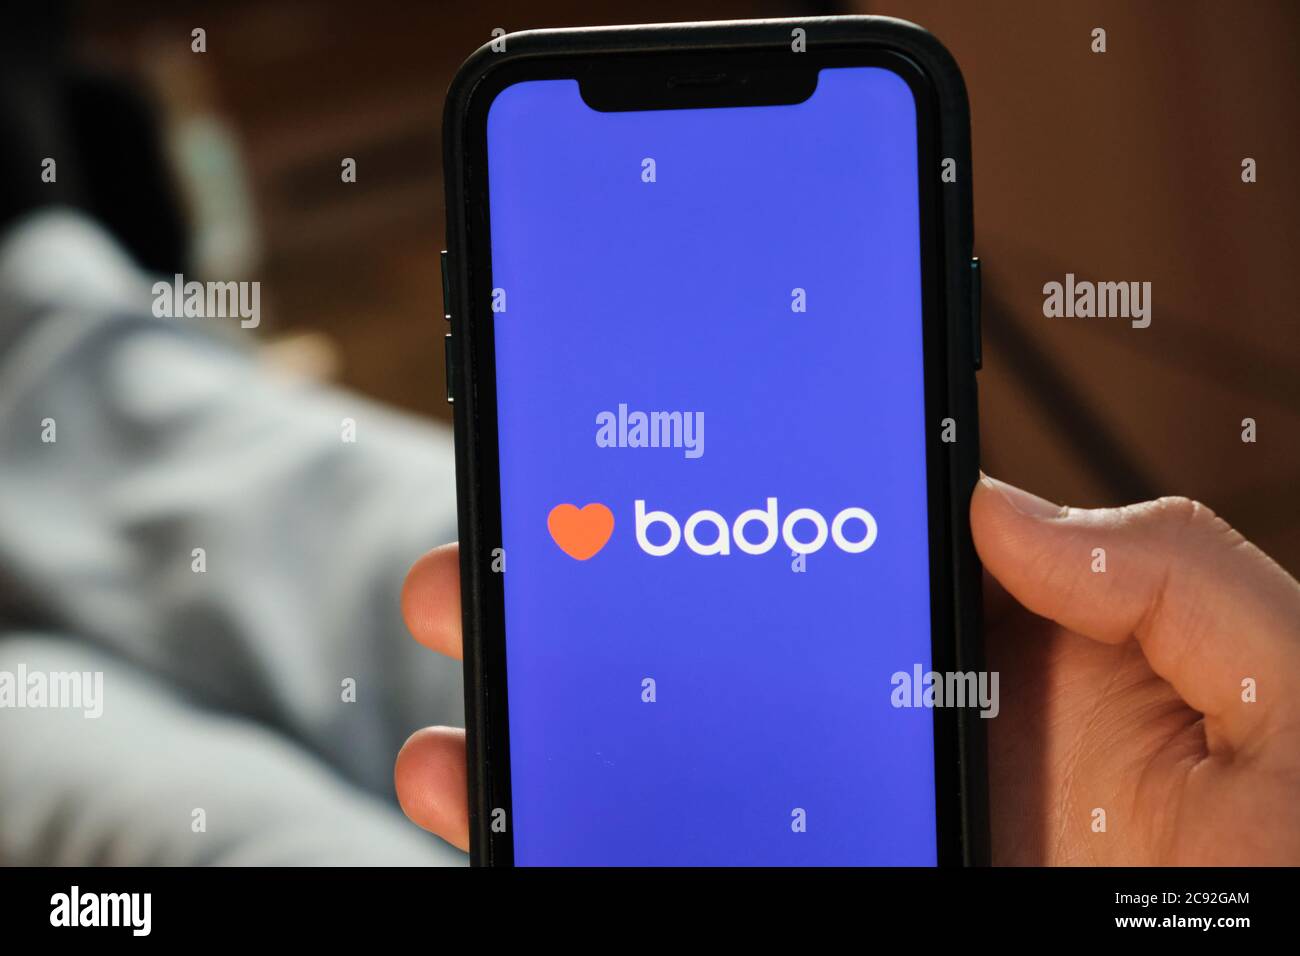 See badoo cant live on 3 Ways